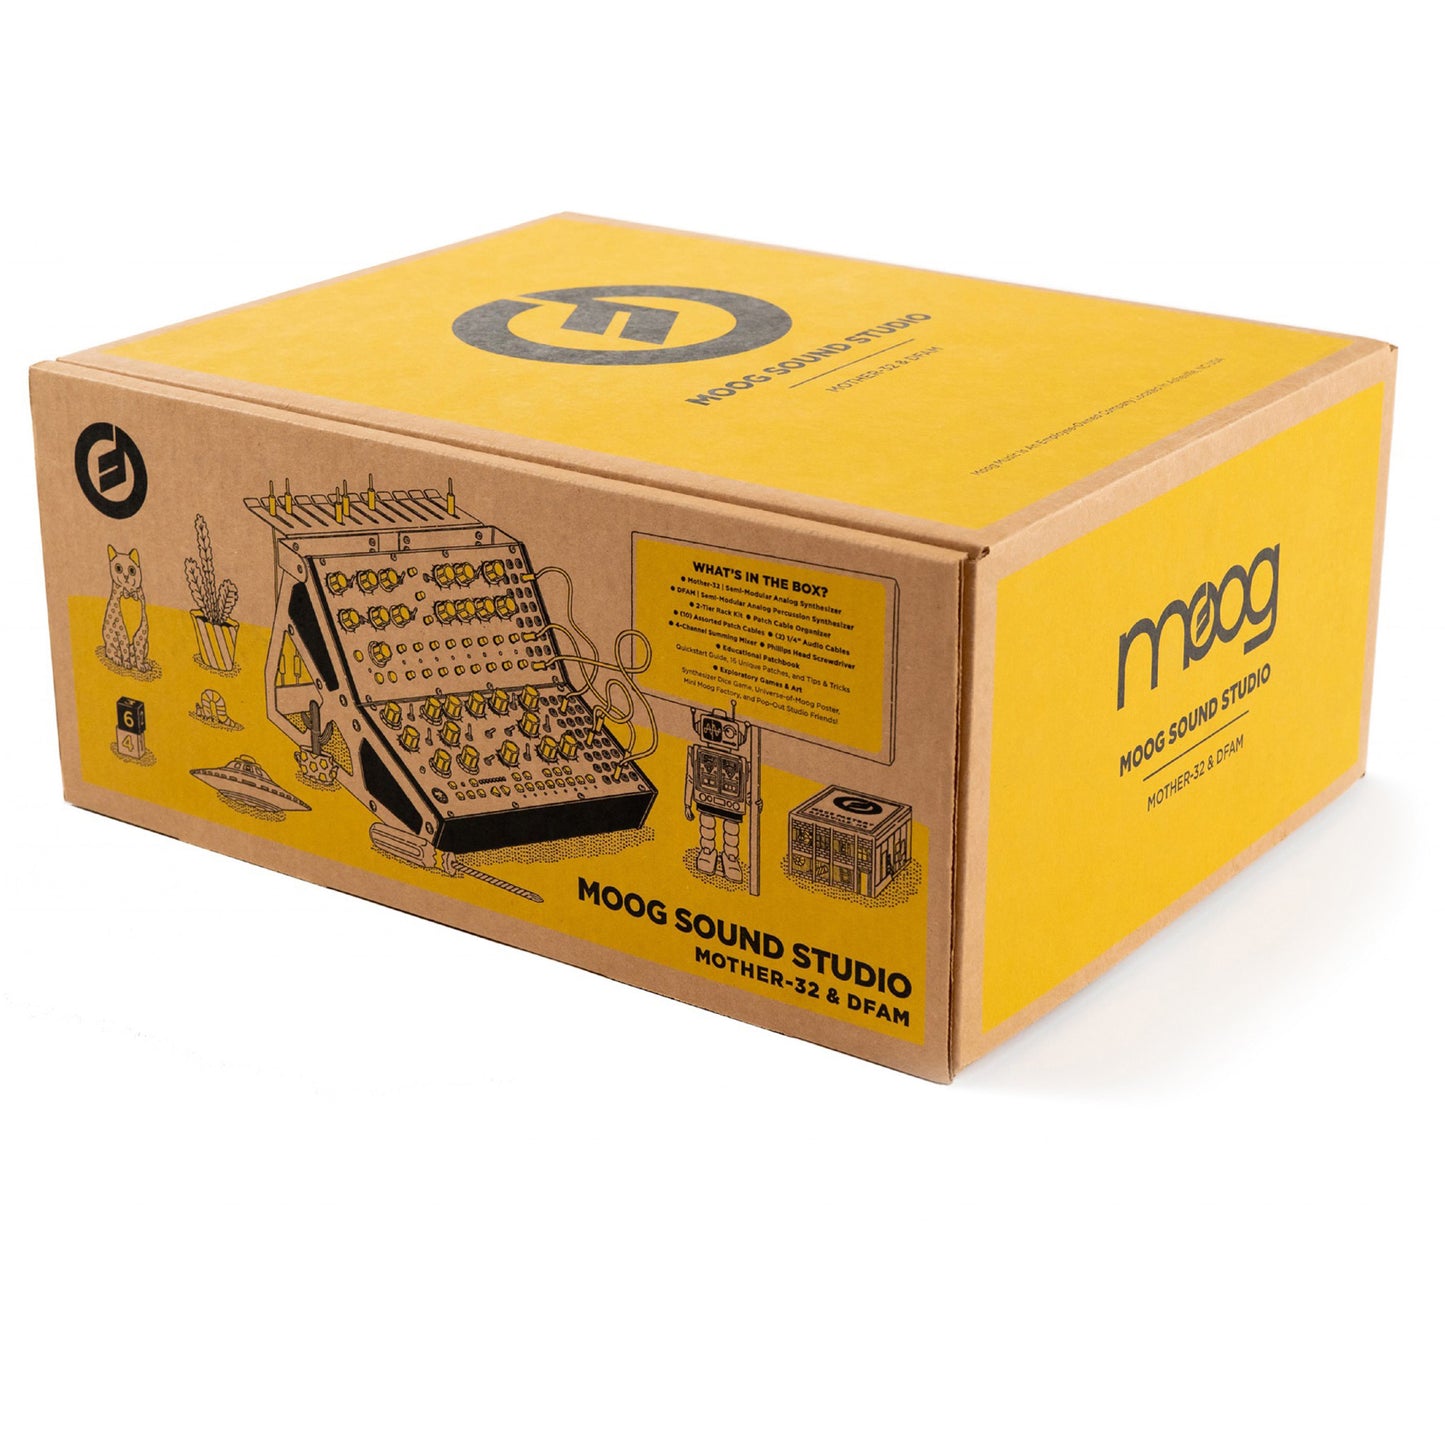 Moog Sound Studio Mother-32 & DFAM Semi Modular Bundle